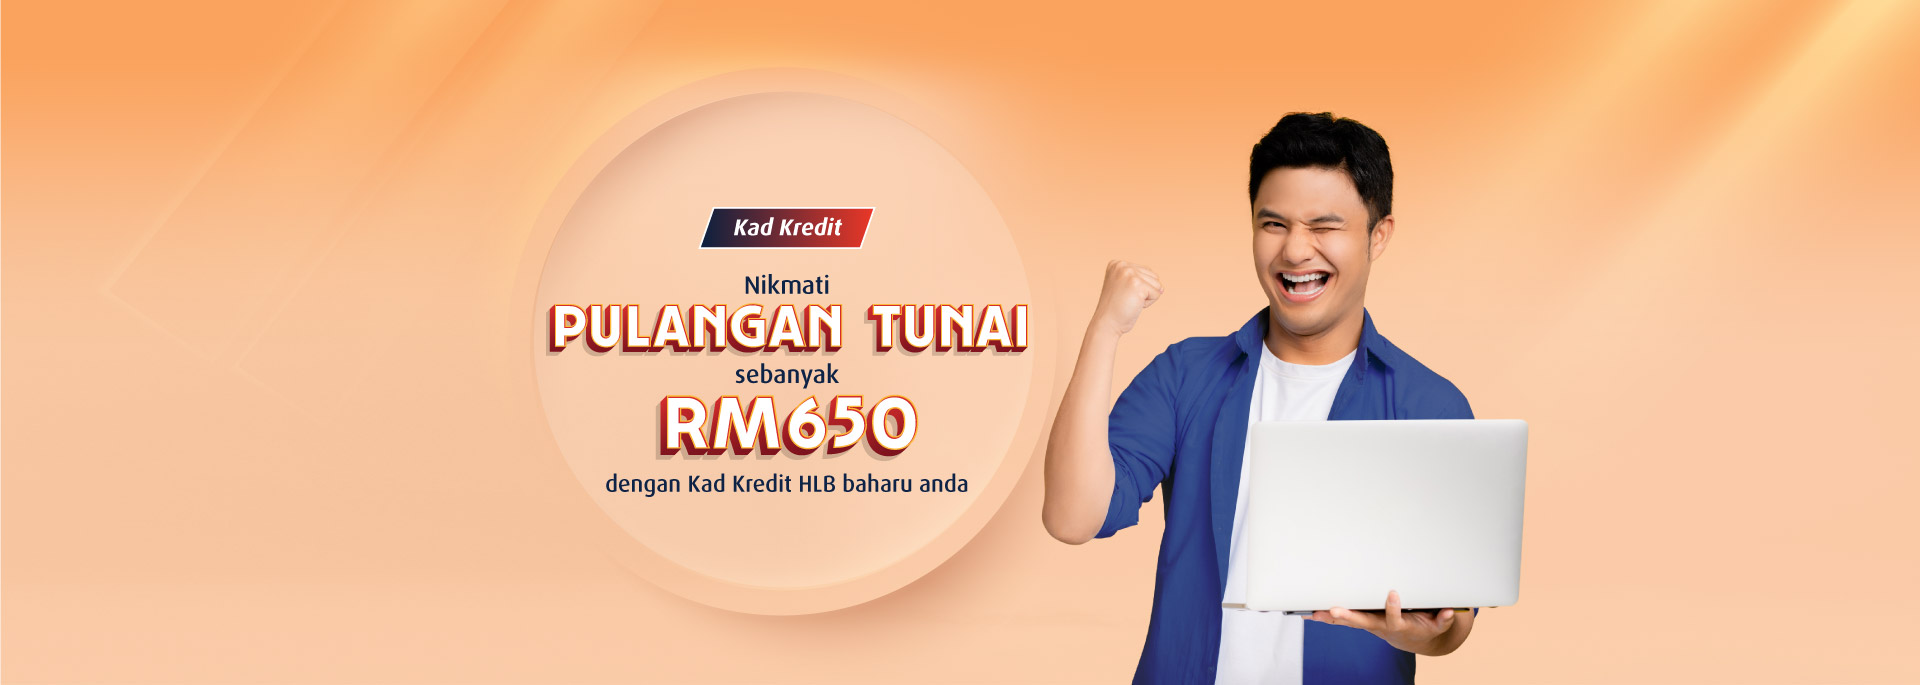 Nikmati pulangan tunai sehingga RM650